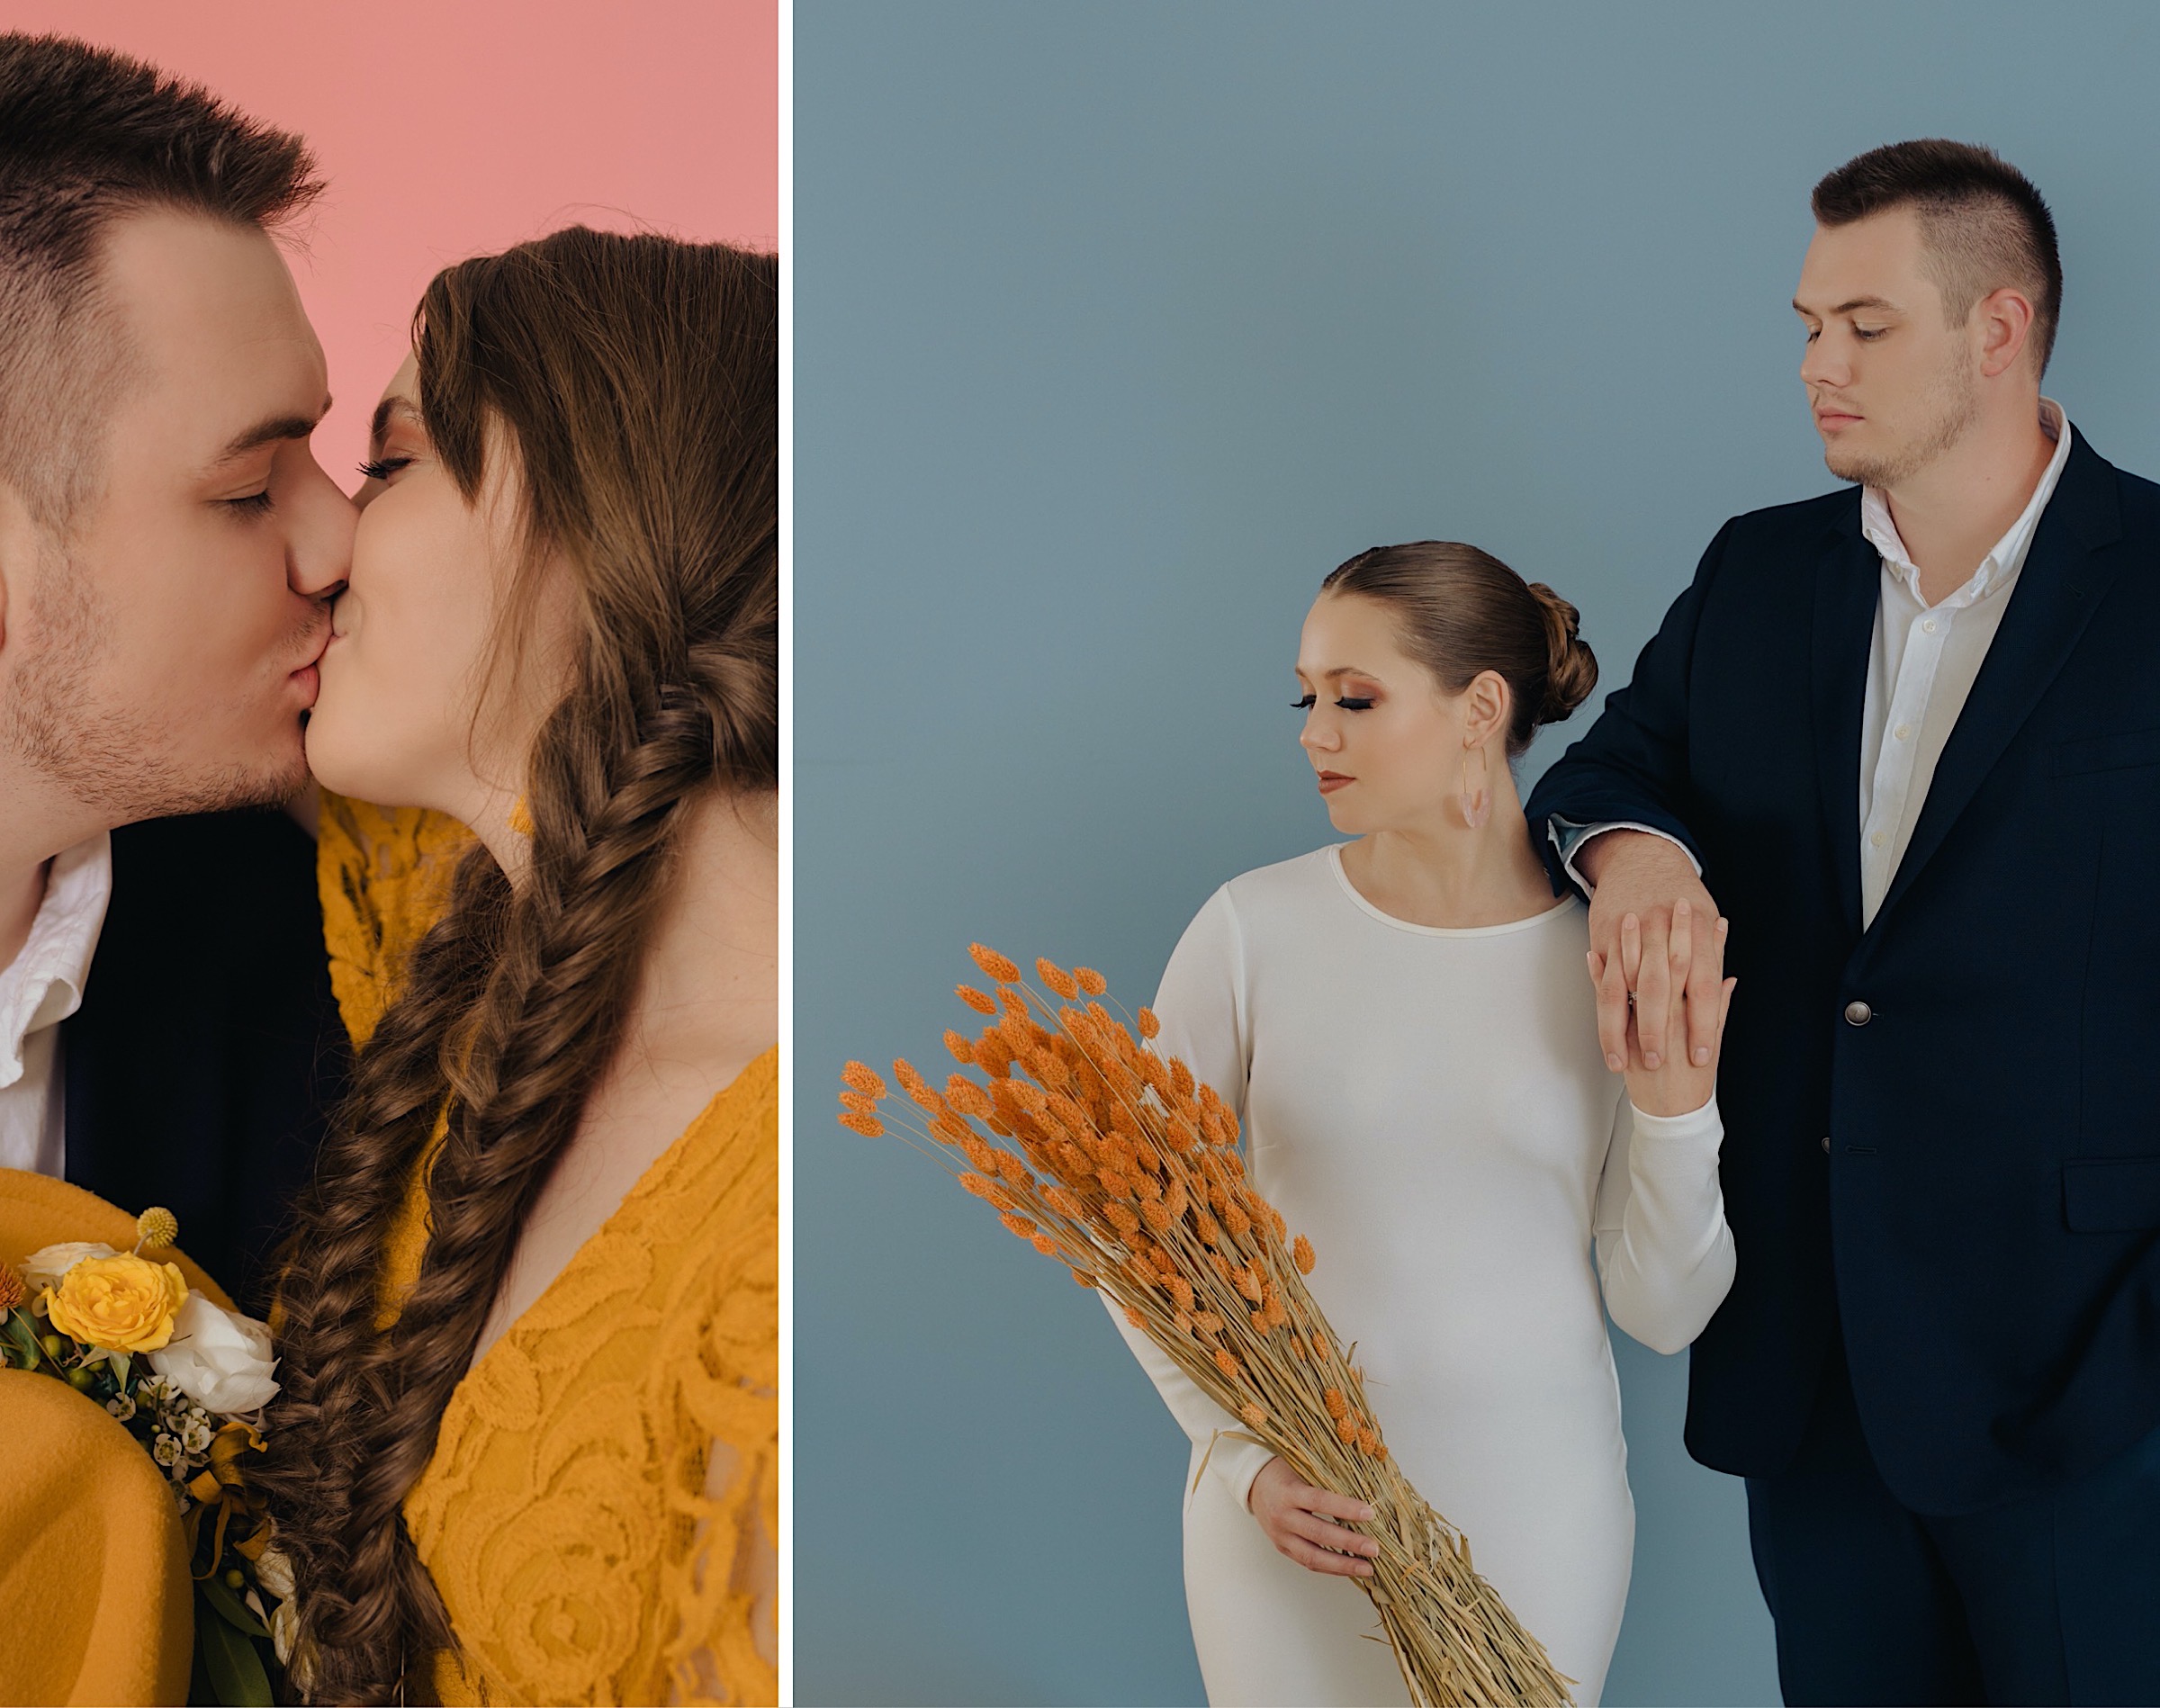 studio-styled-wedding-shoot-modern-sleek-wedding-dress-bride-groom-yellow-gown-braid-blue-background-pink